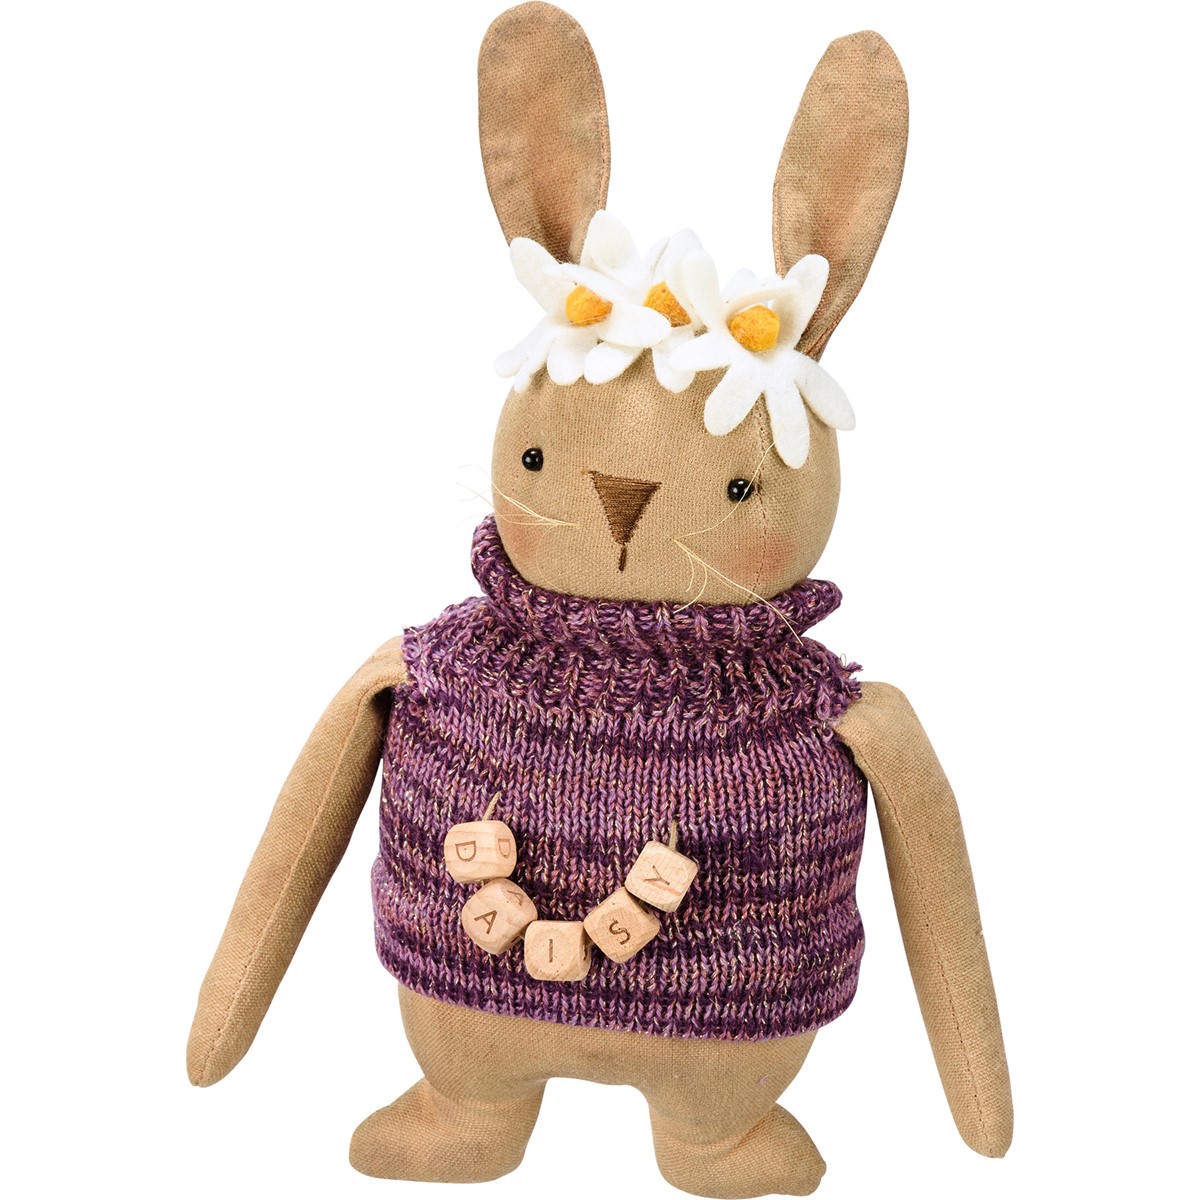 Doll - Daisy Rabbit - 5.50" x 11" x 3.25" - Cotton, Wood, Wire, Plastic